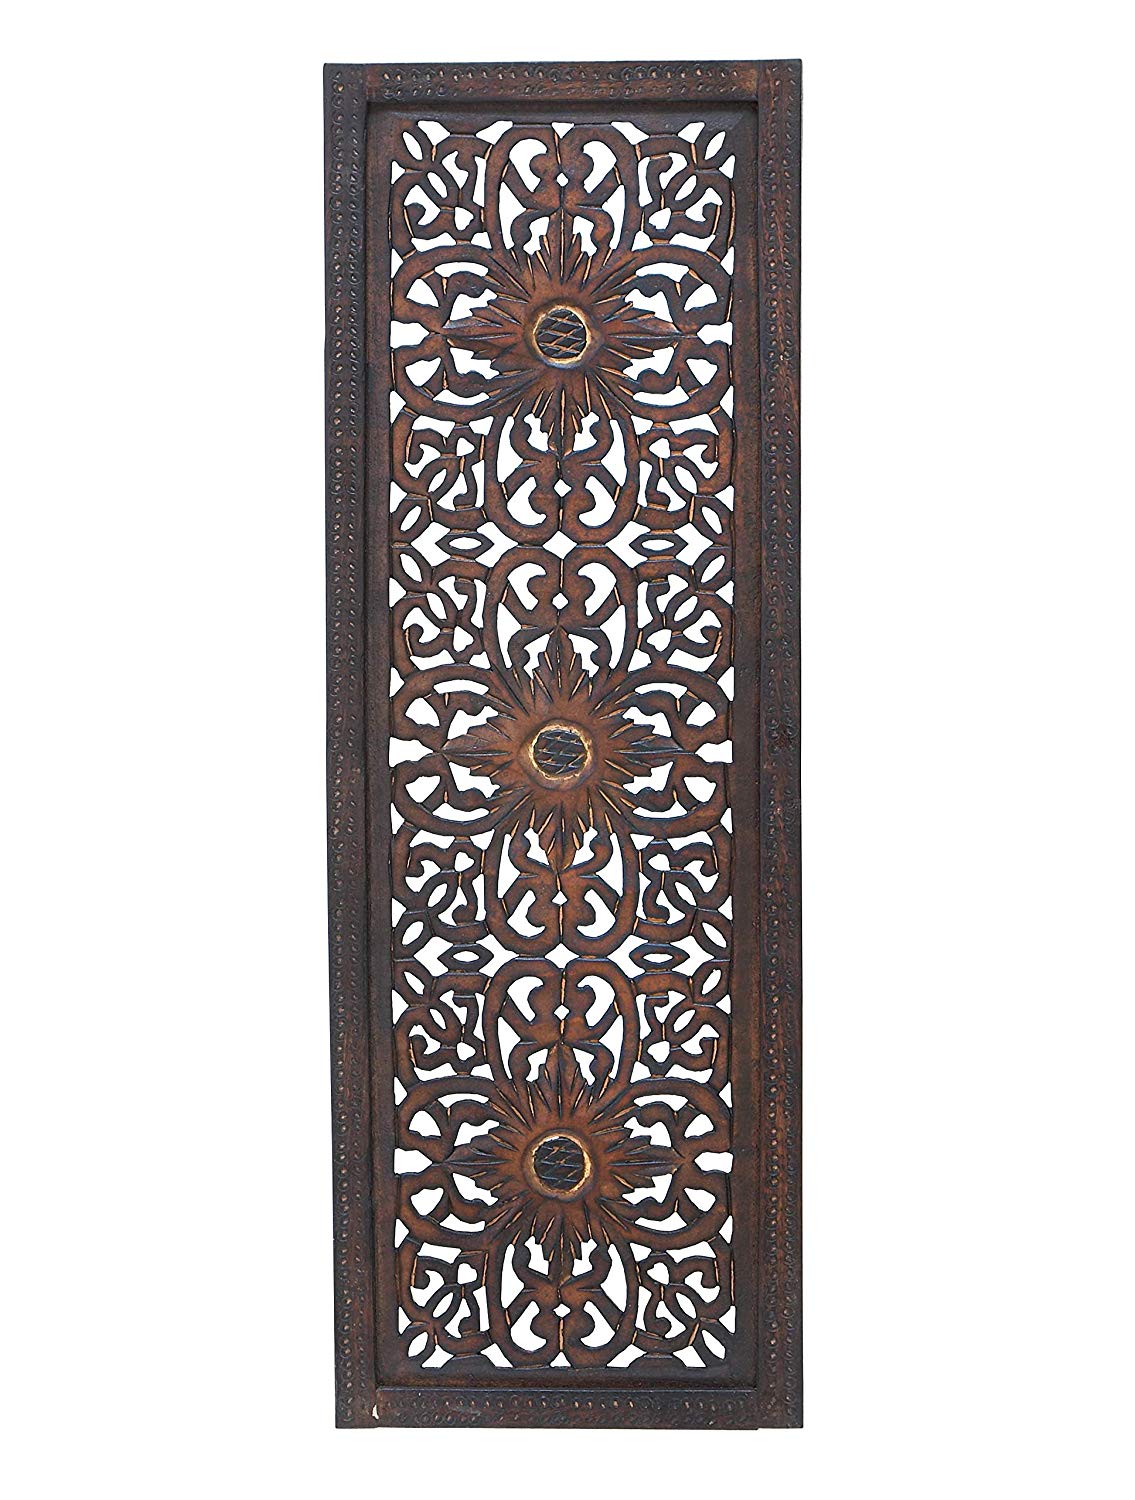 Benzara 34087 Elegant Sculpture 2 Assorted Wood Wall Panel